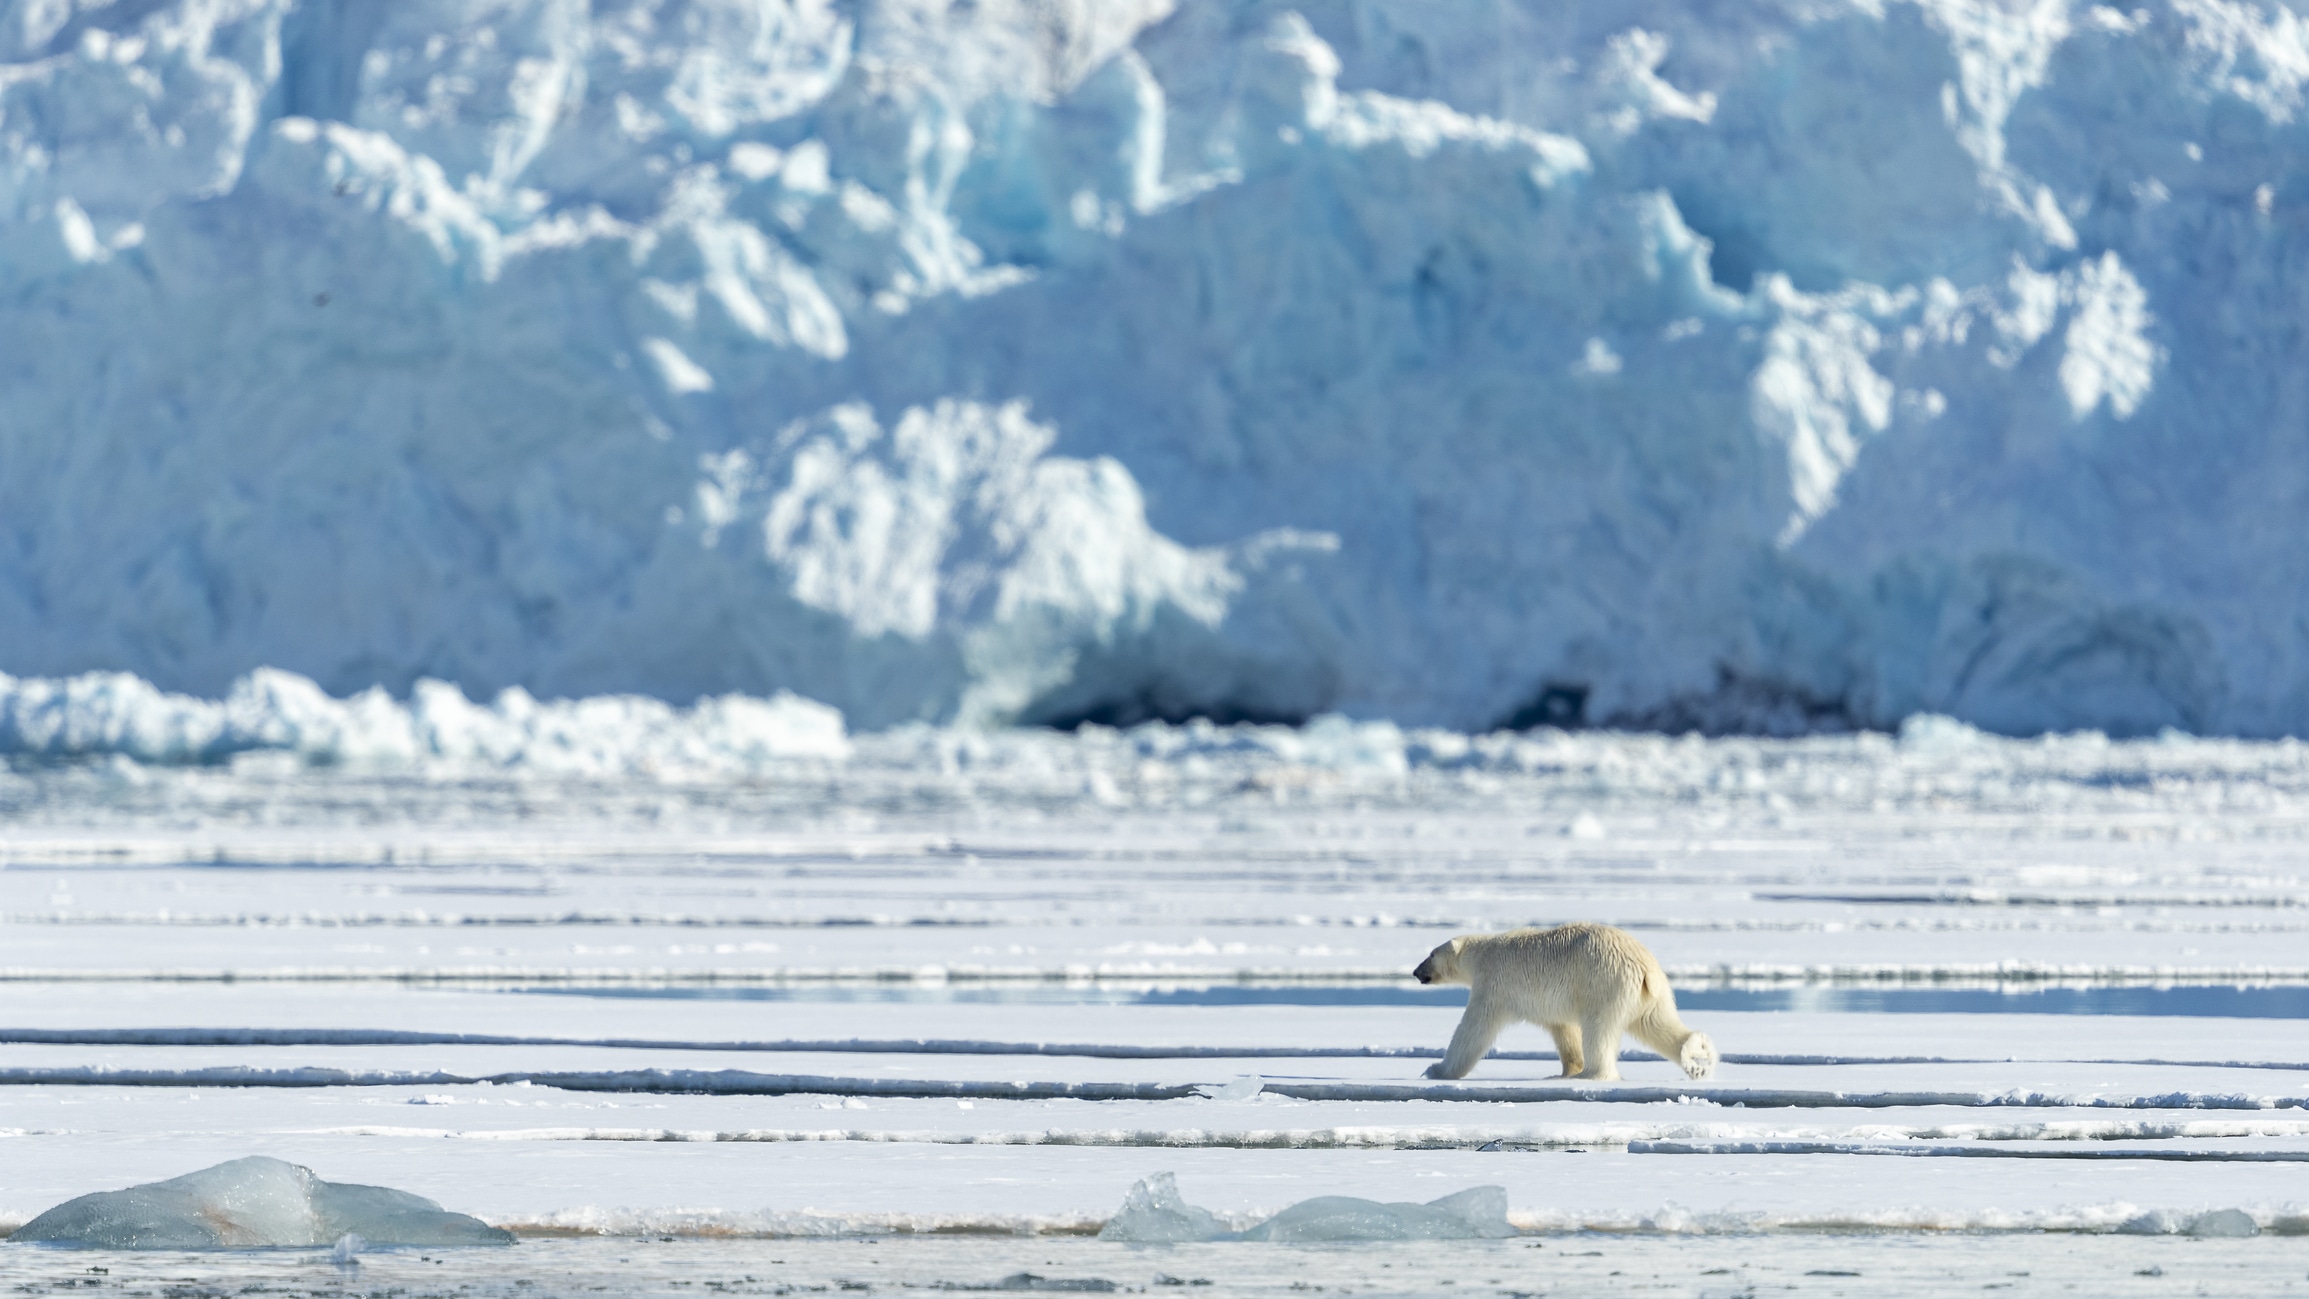 A polar bear walks on the ice floe, a glacier in the background